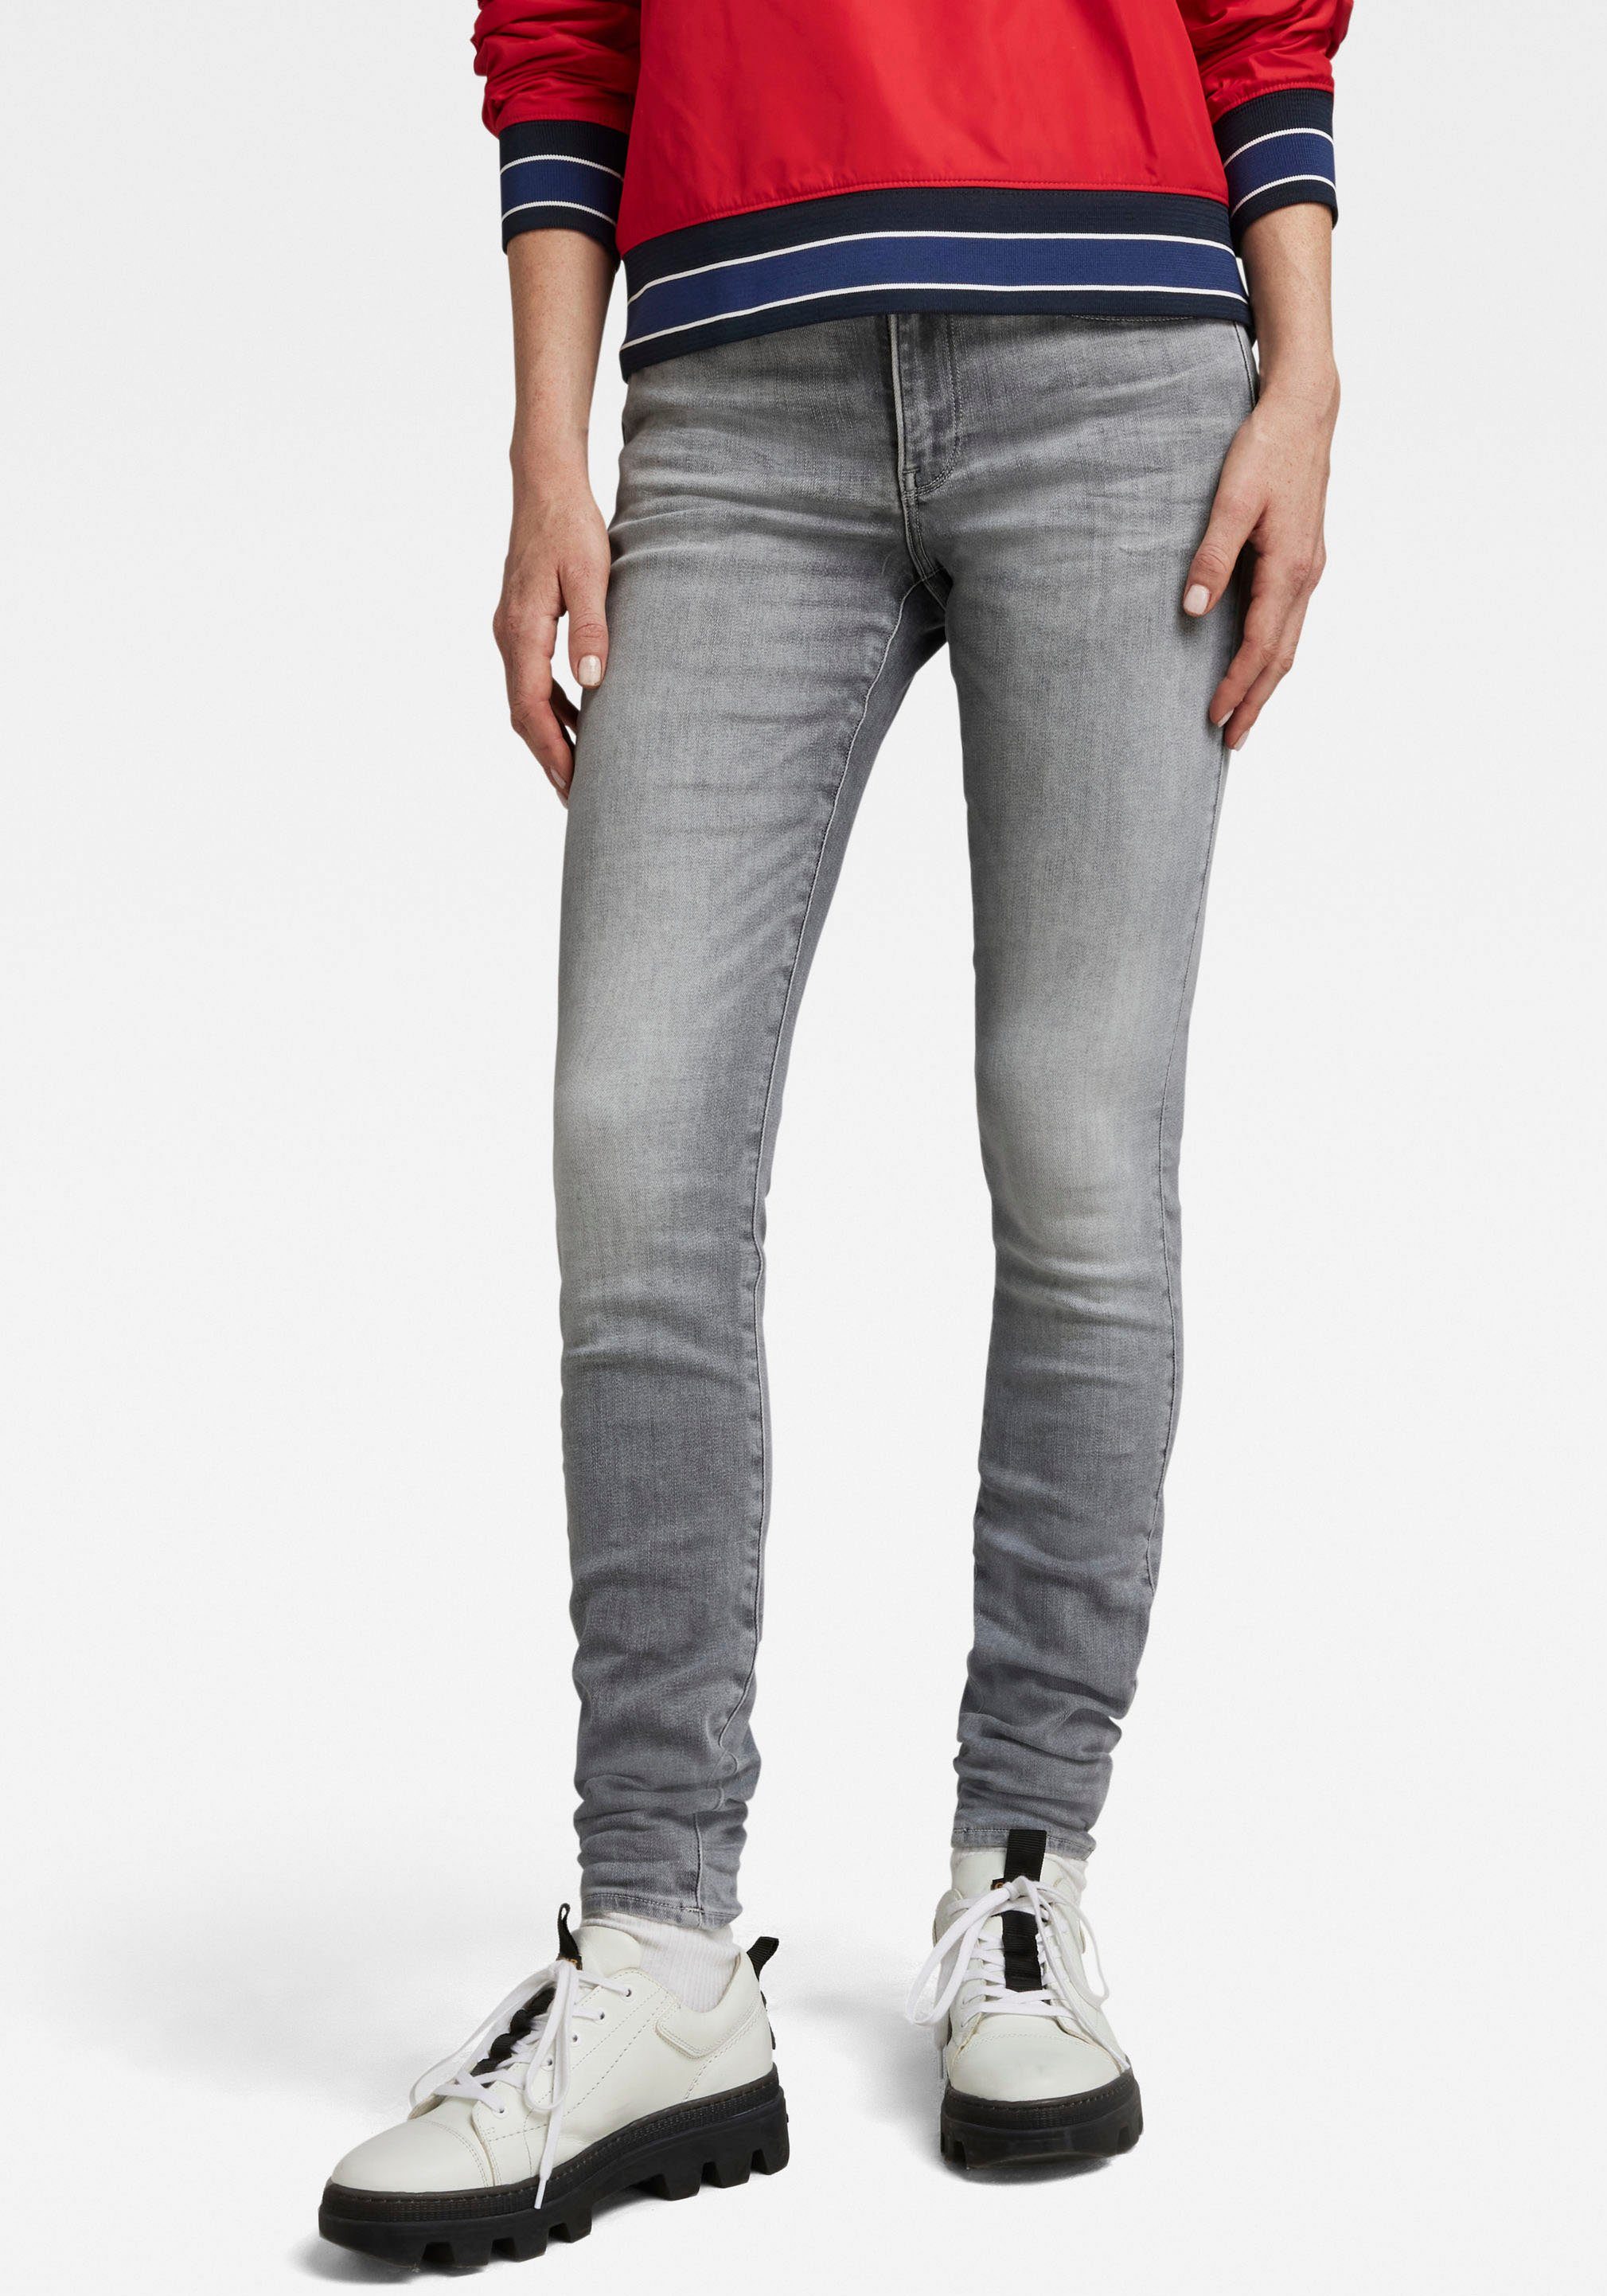 G-Star RAW Skinny-fit-Jeans mit sun Stretchanteil Wohlfühlfaktor durch grey faded